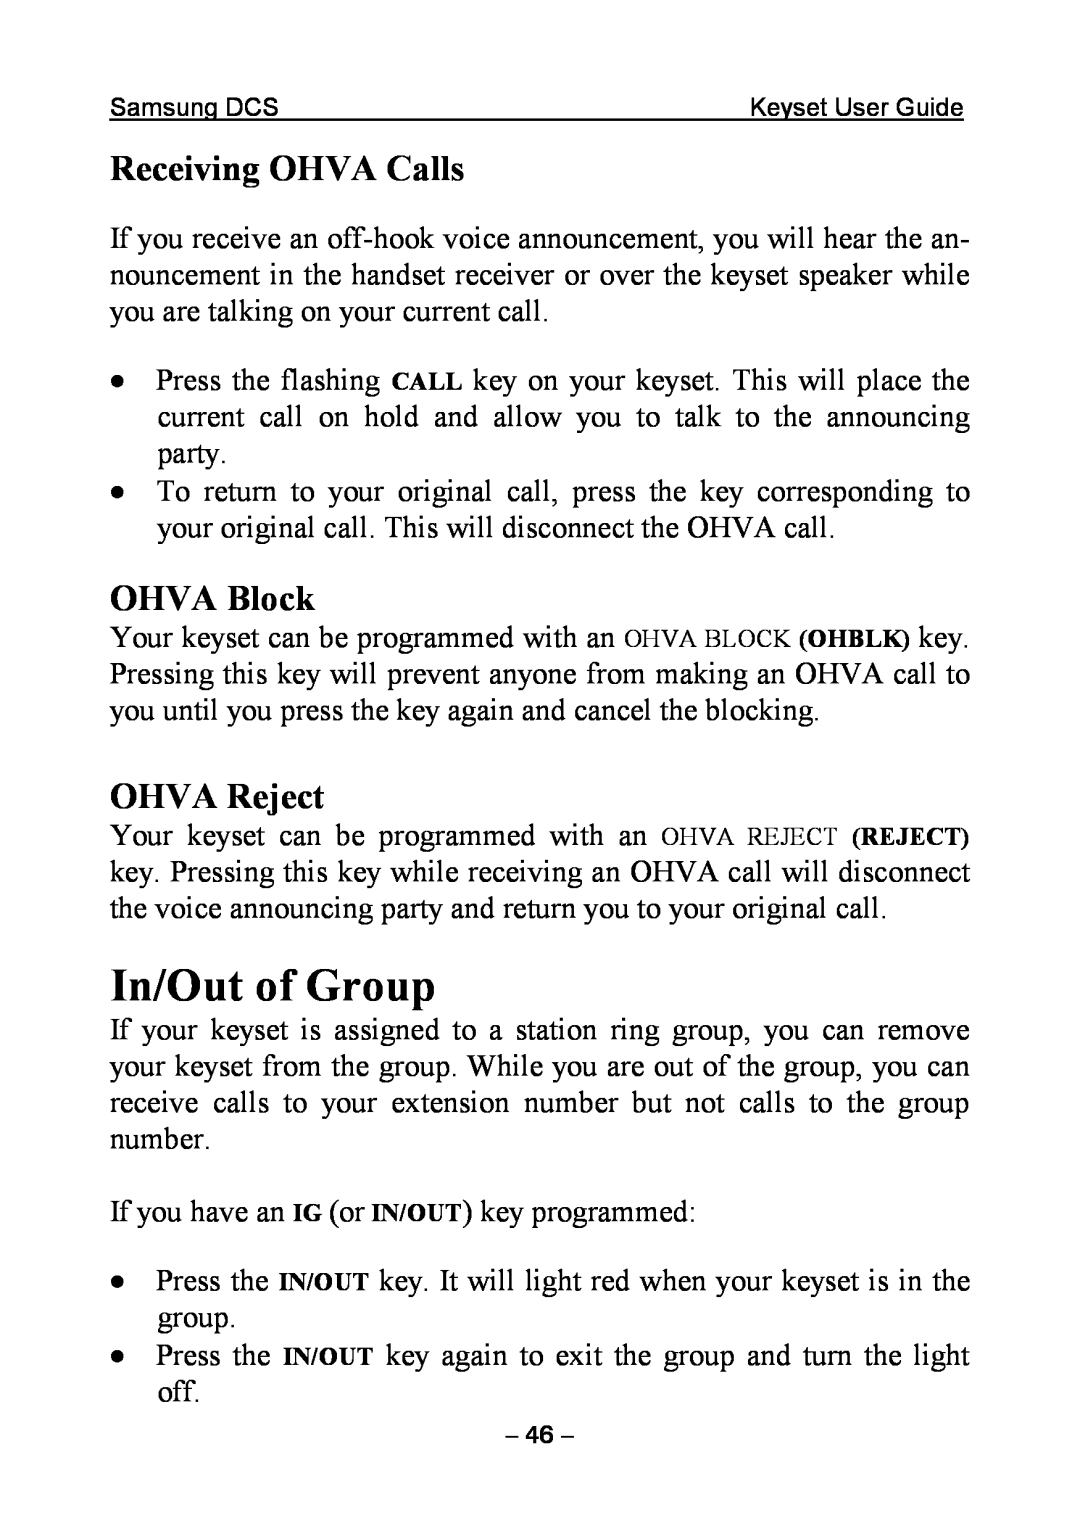 Samsung DCS KEYSET manual In/Out of Group, Receiving OHVA Calls, OHVA Block, OHVA Reject 